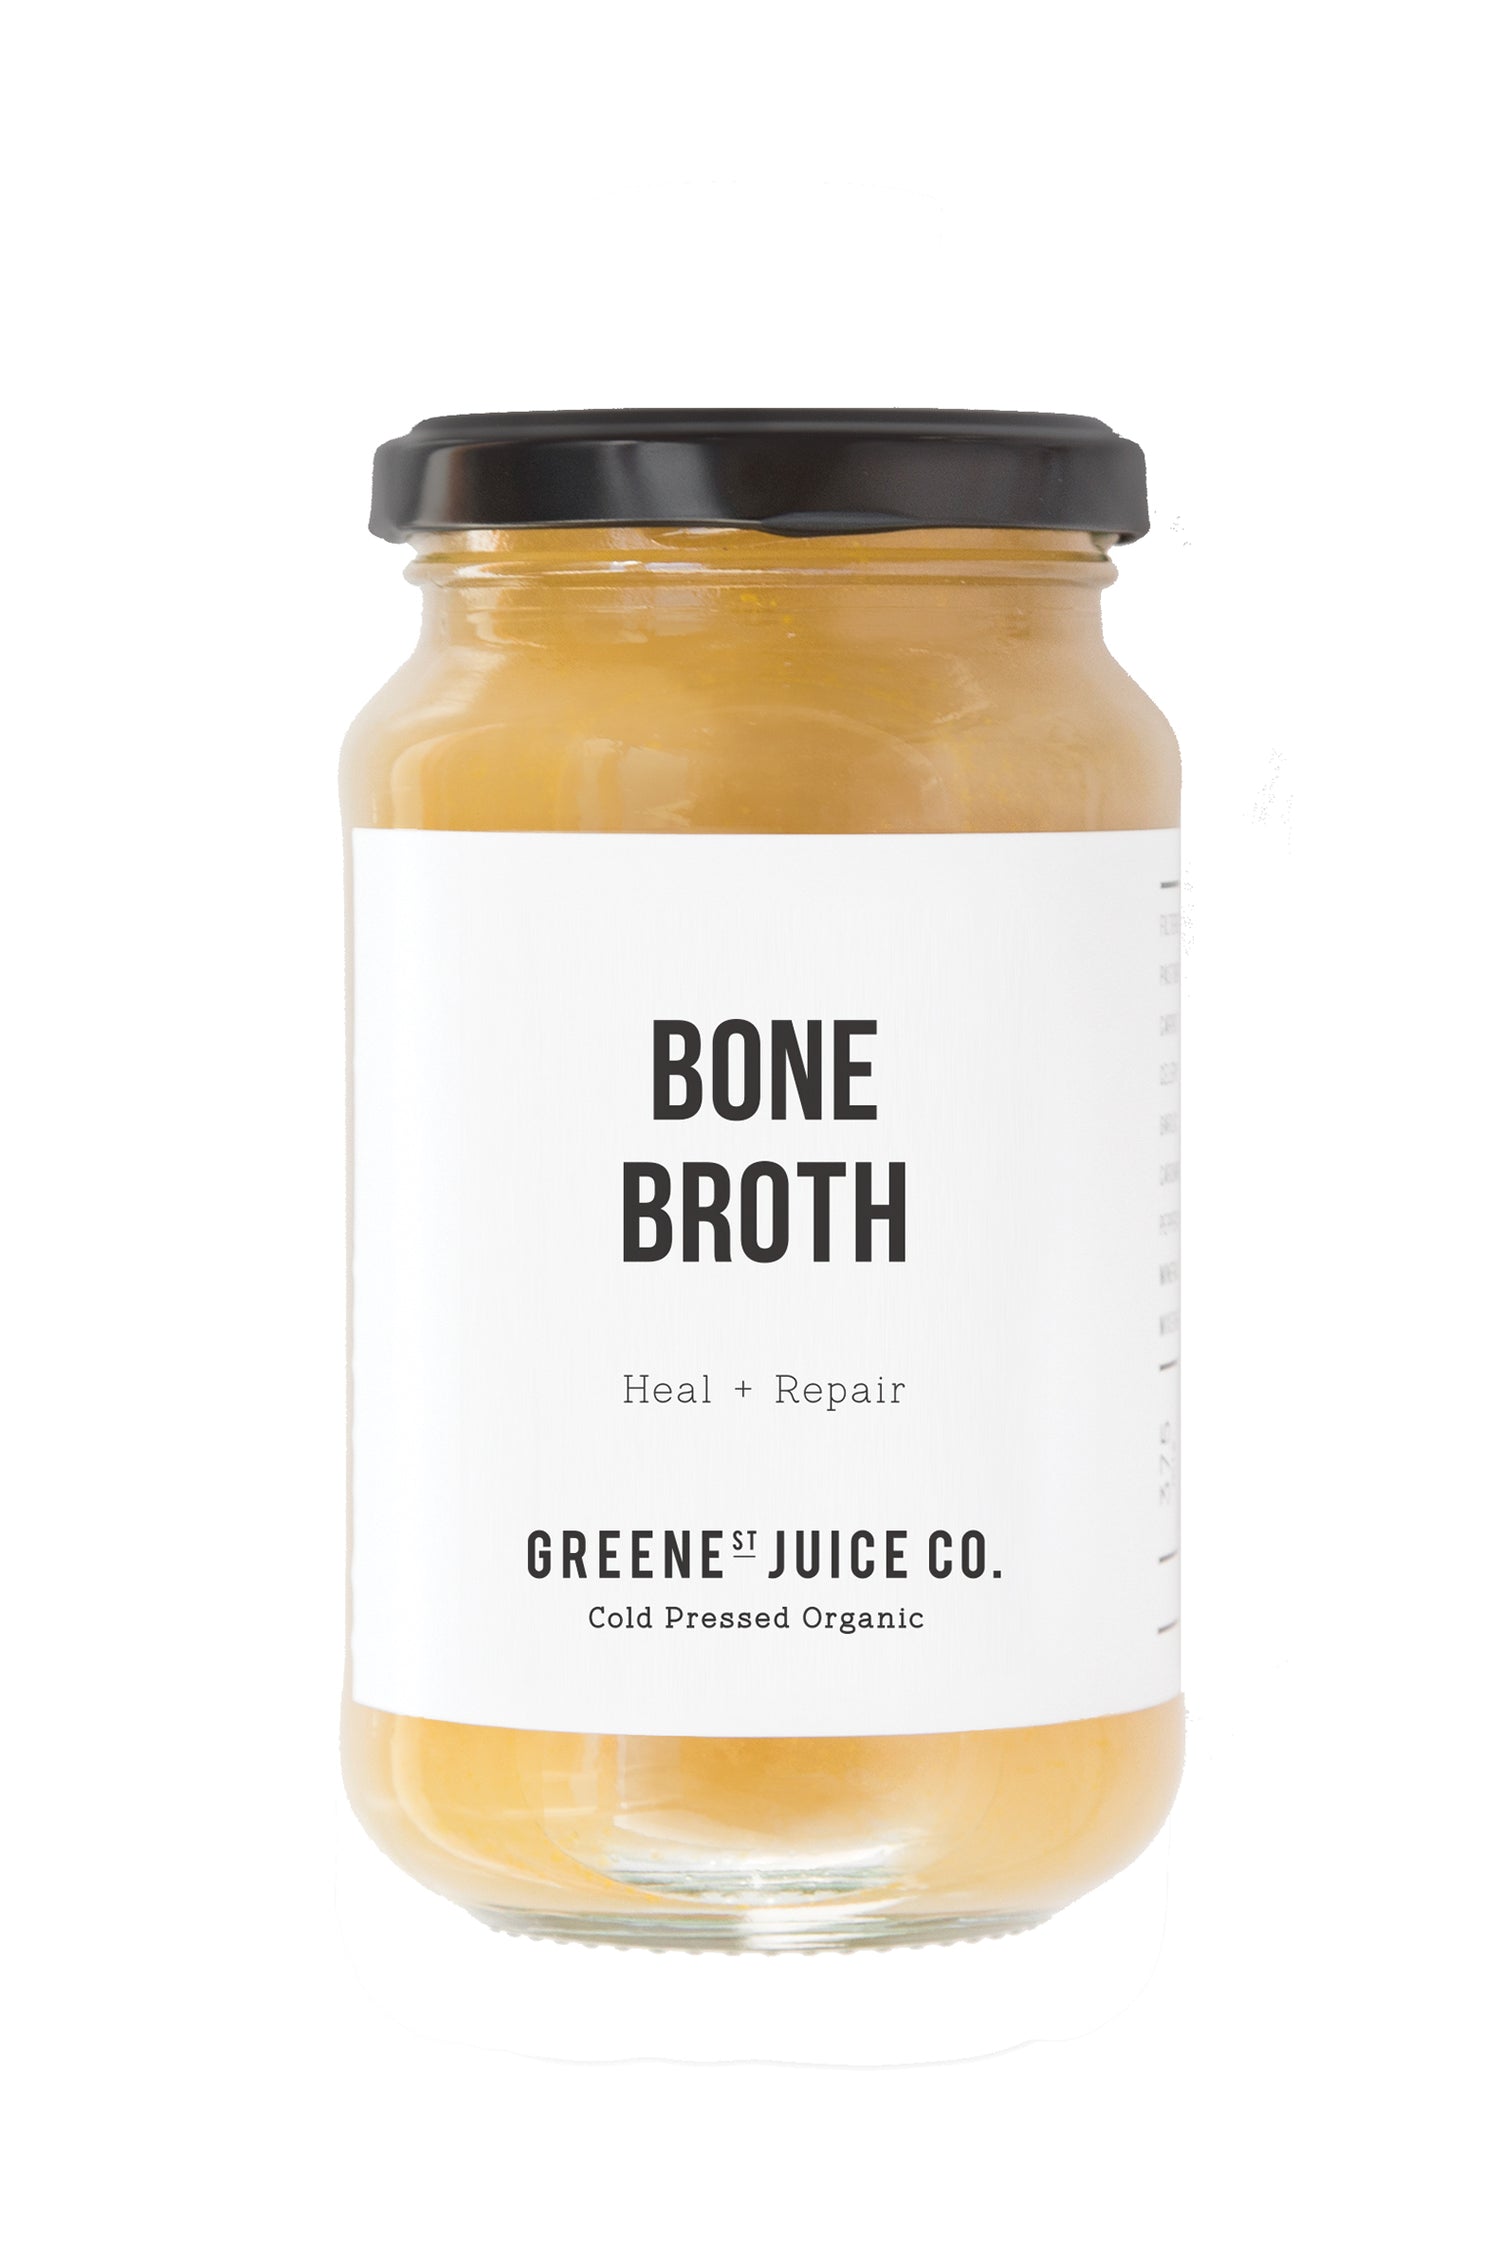 Bone Broth Melbourne